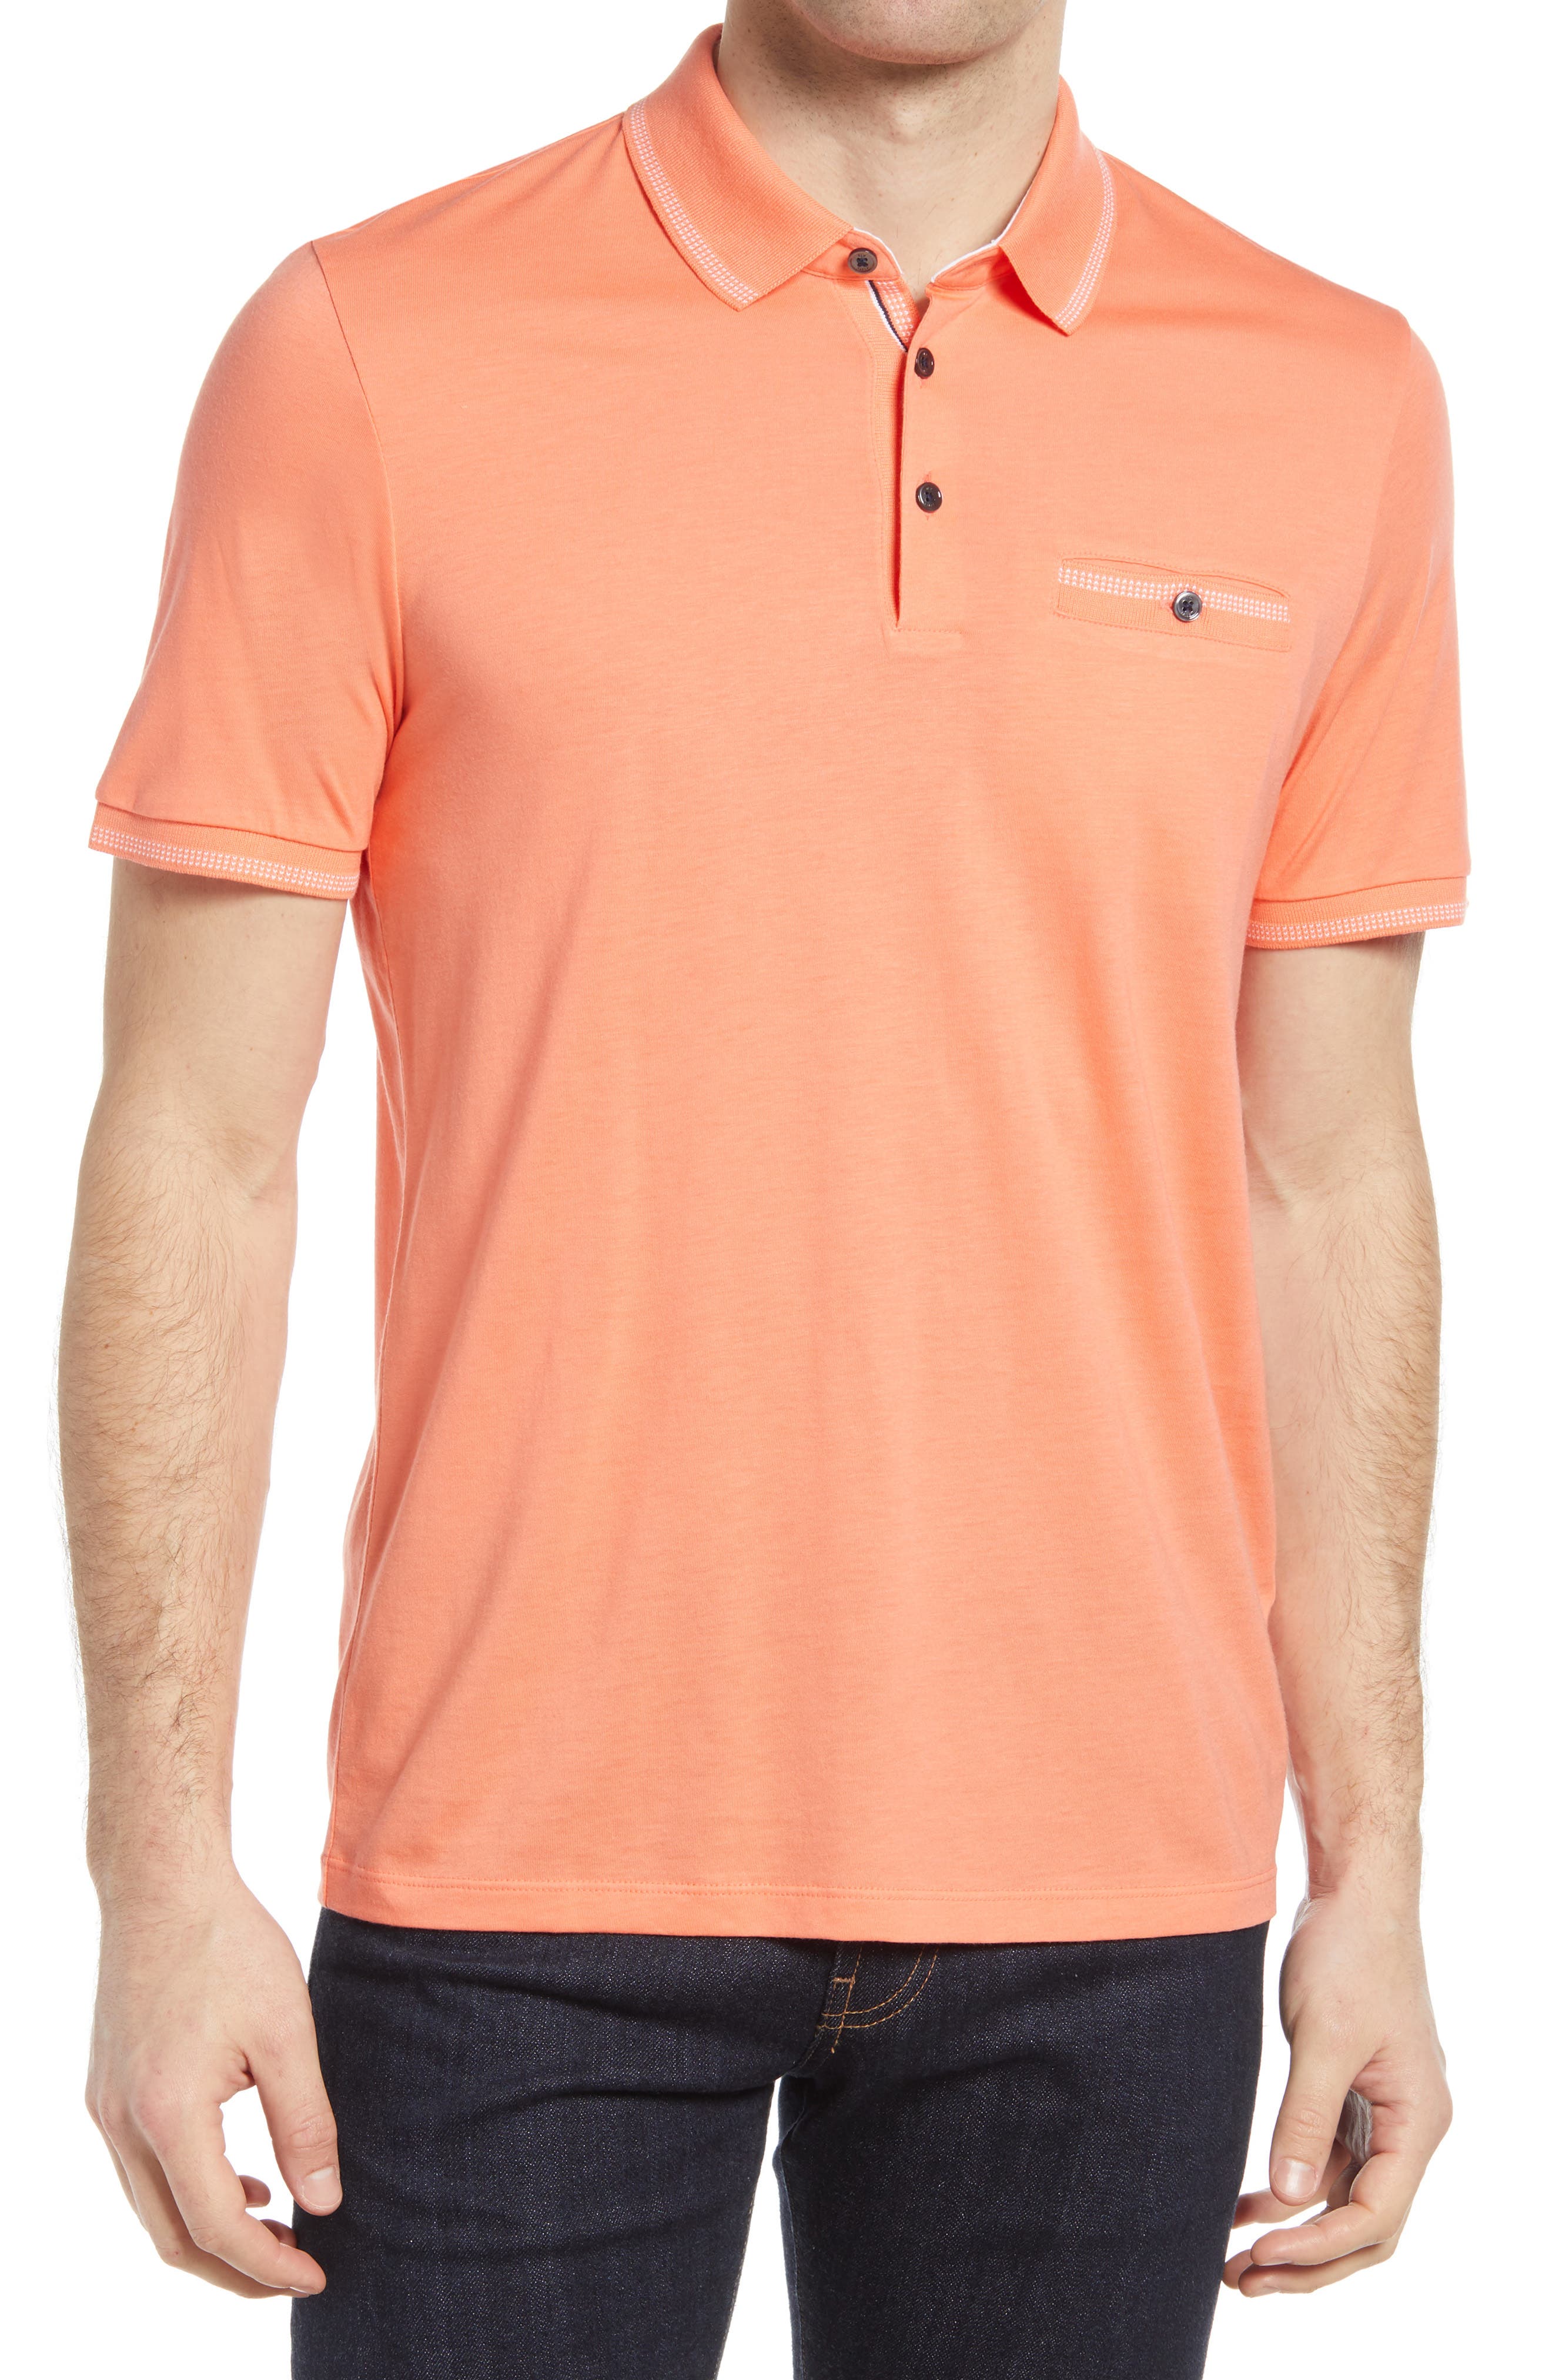 light orange polo shirt